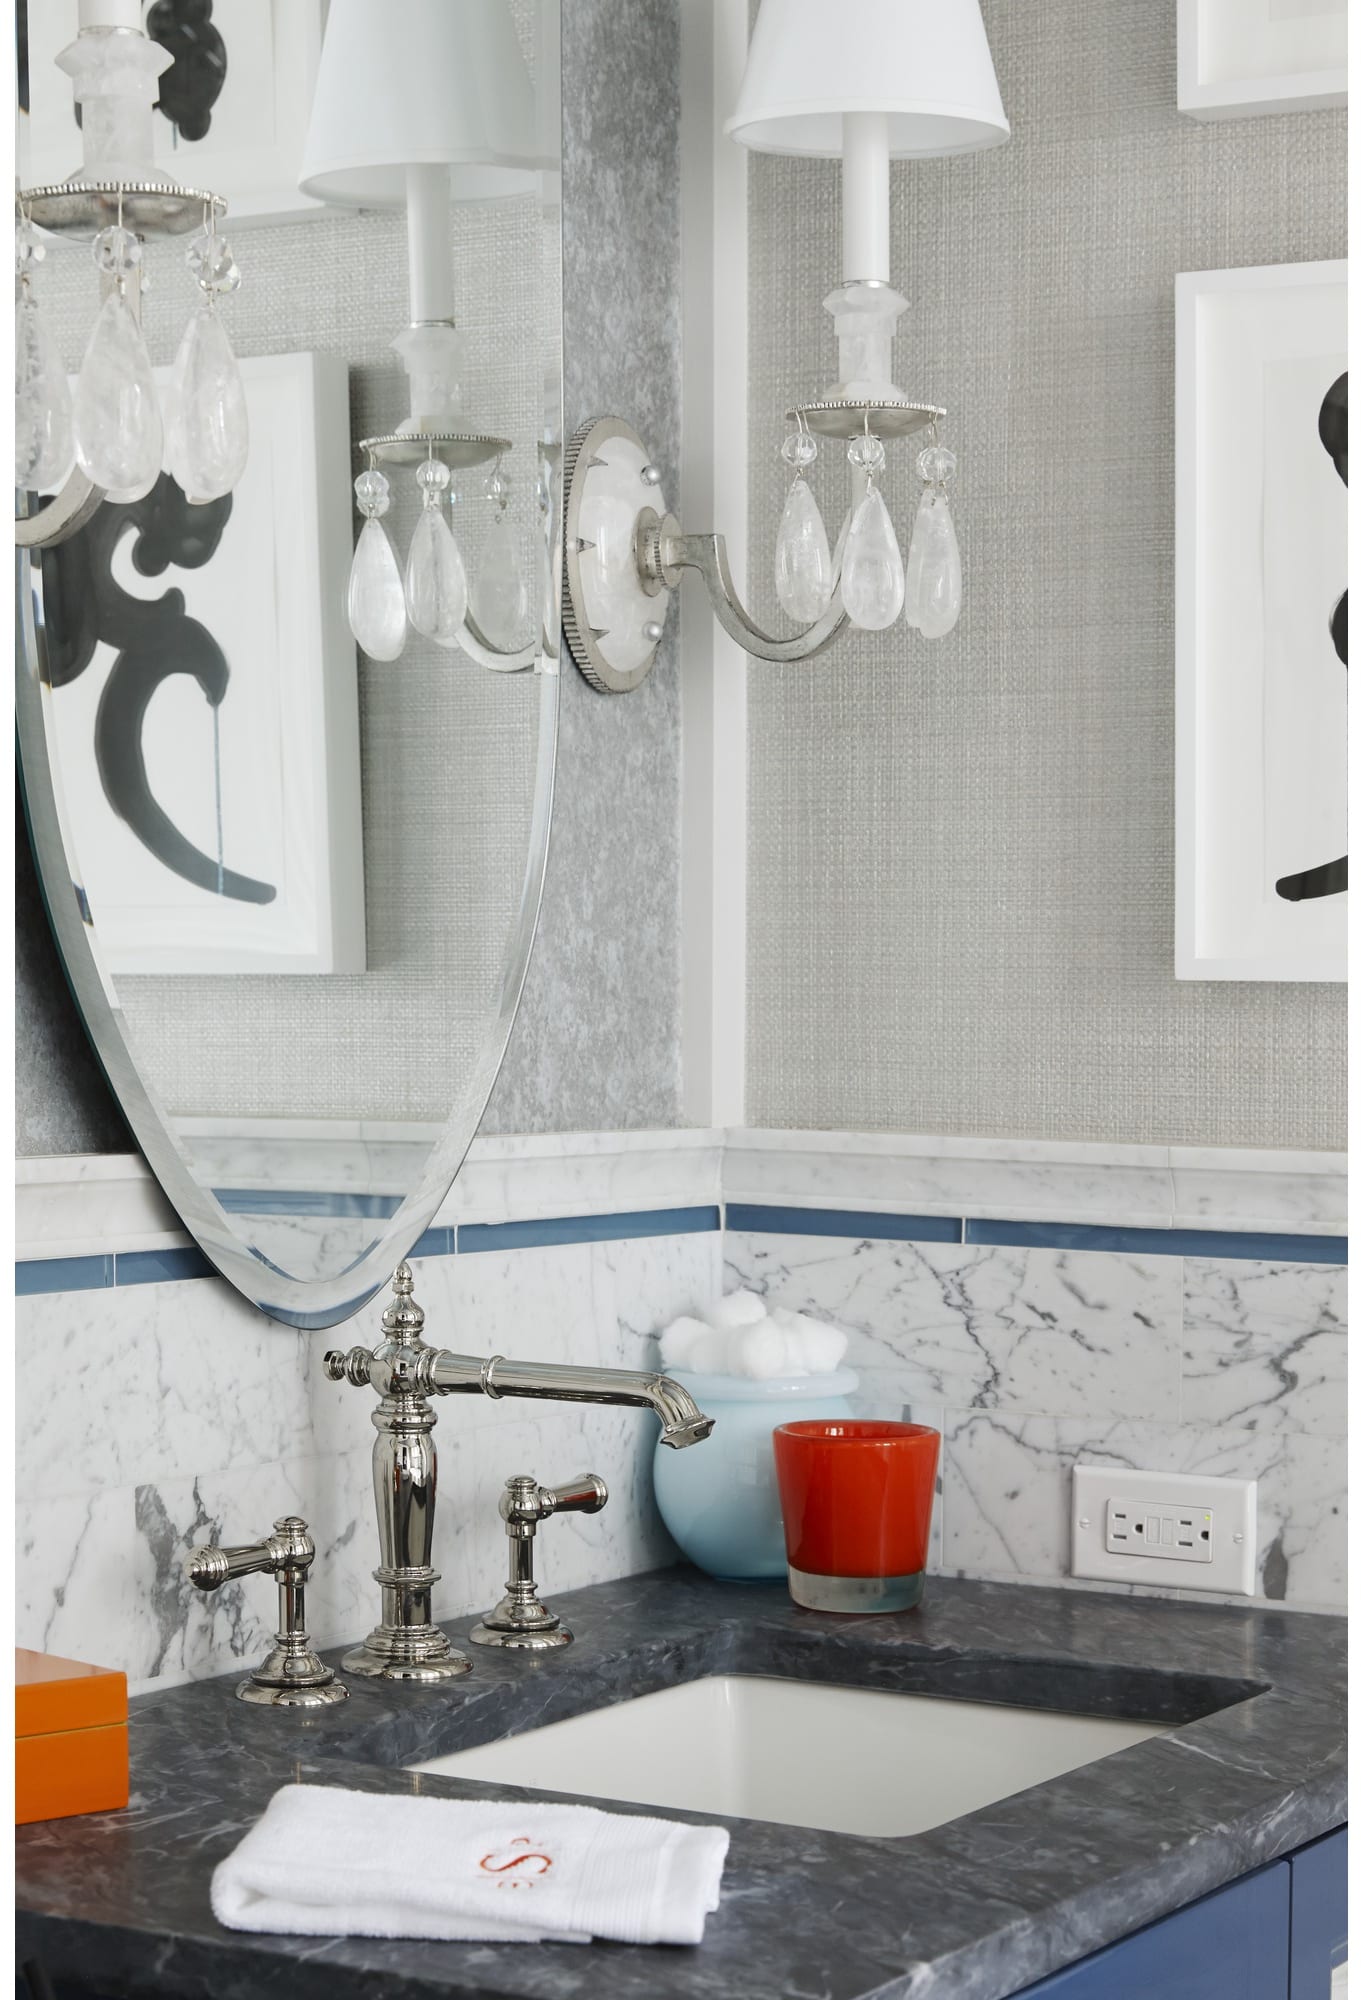 Kohler K-98068-4-CP Artifacts Lever Handles for Bathroom Faucet